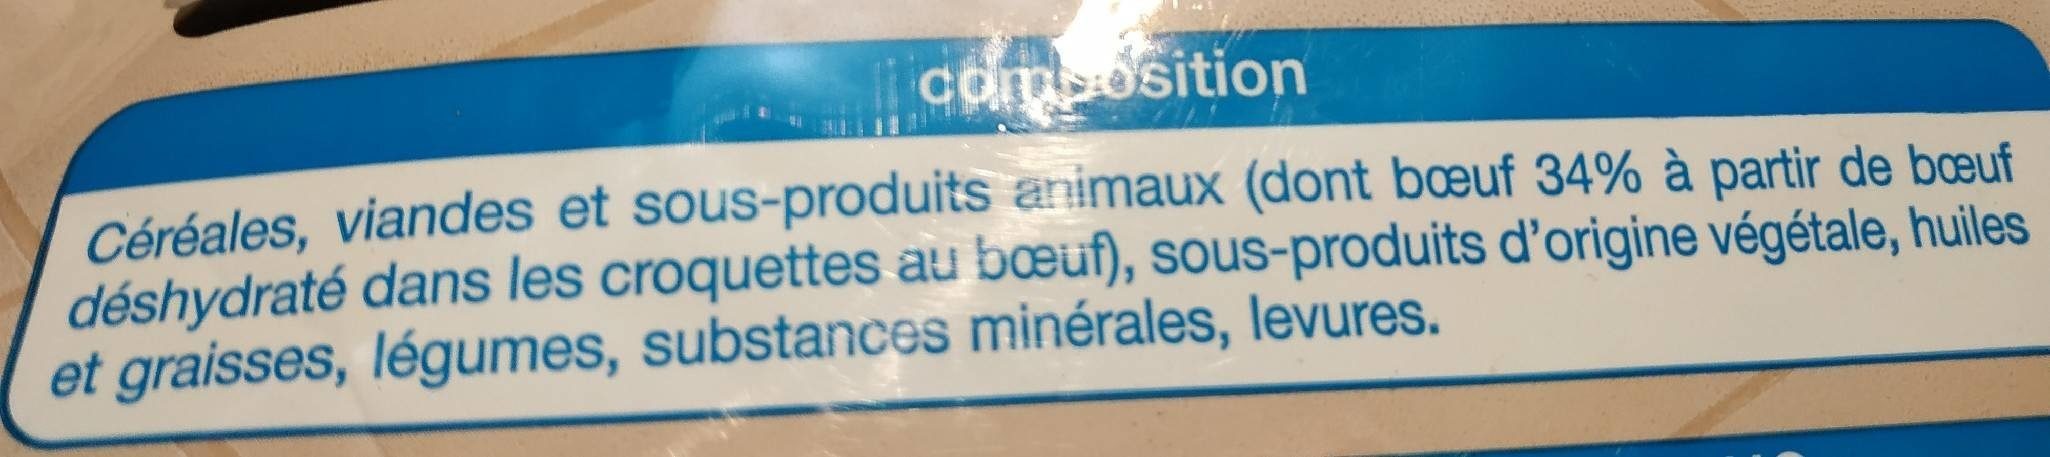 Adult multi-croquettes nutrition & plaisir - Ingredients - fr